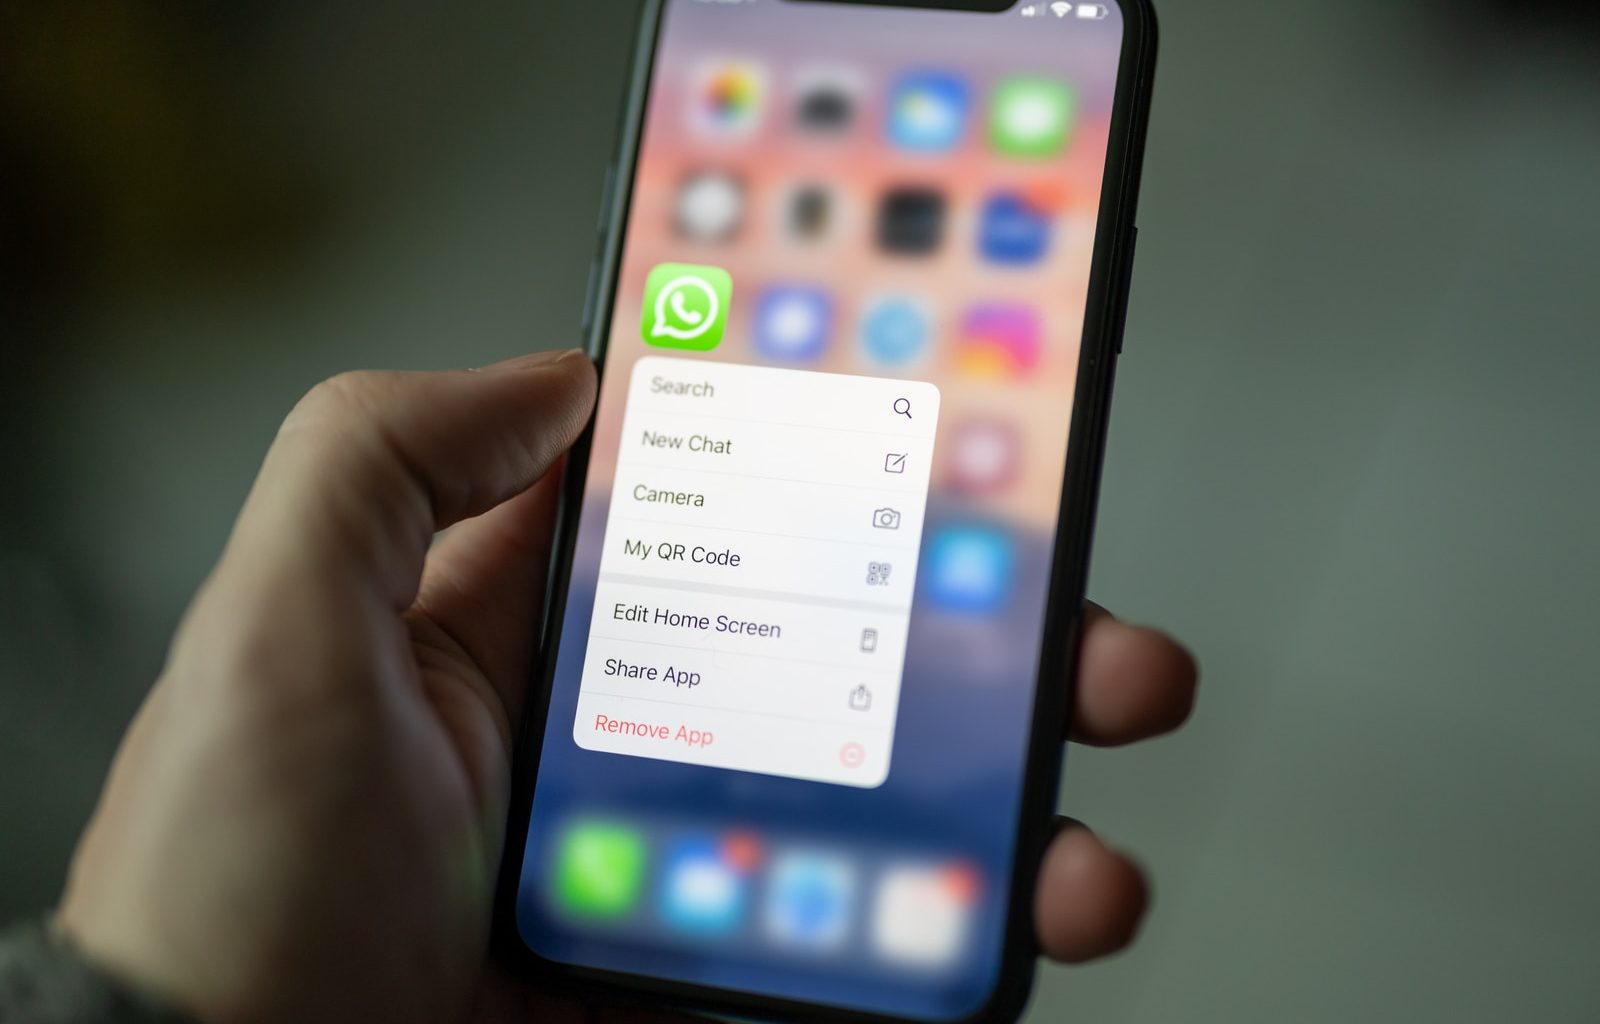 WhatsApp brings improvements for calls